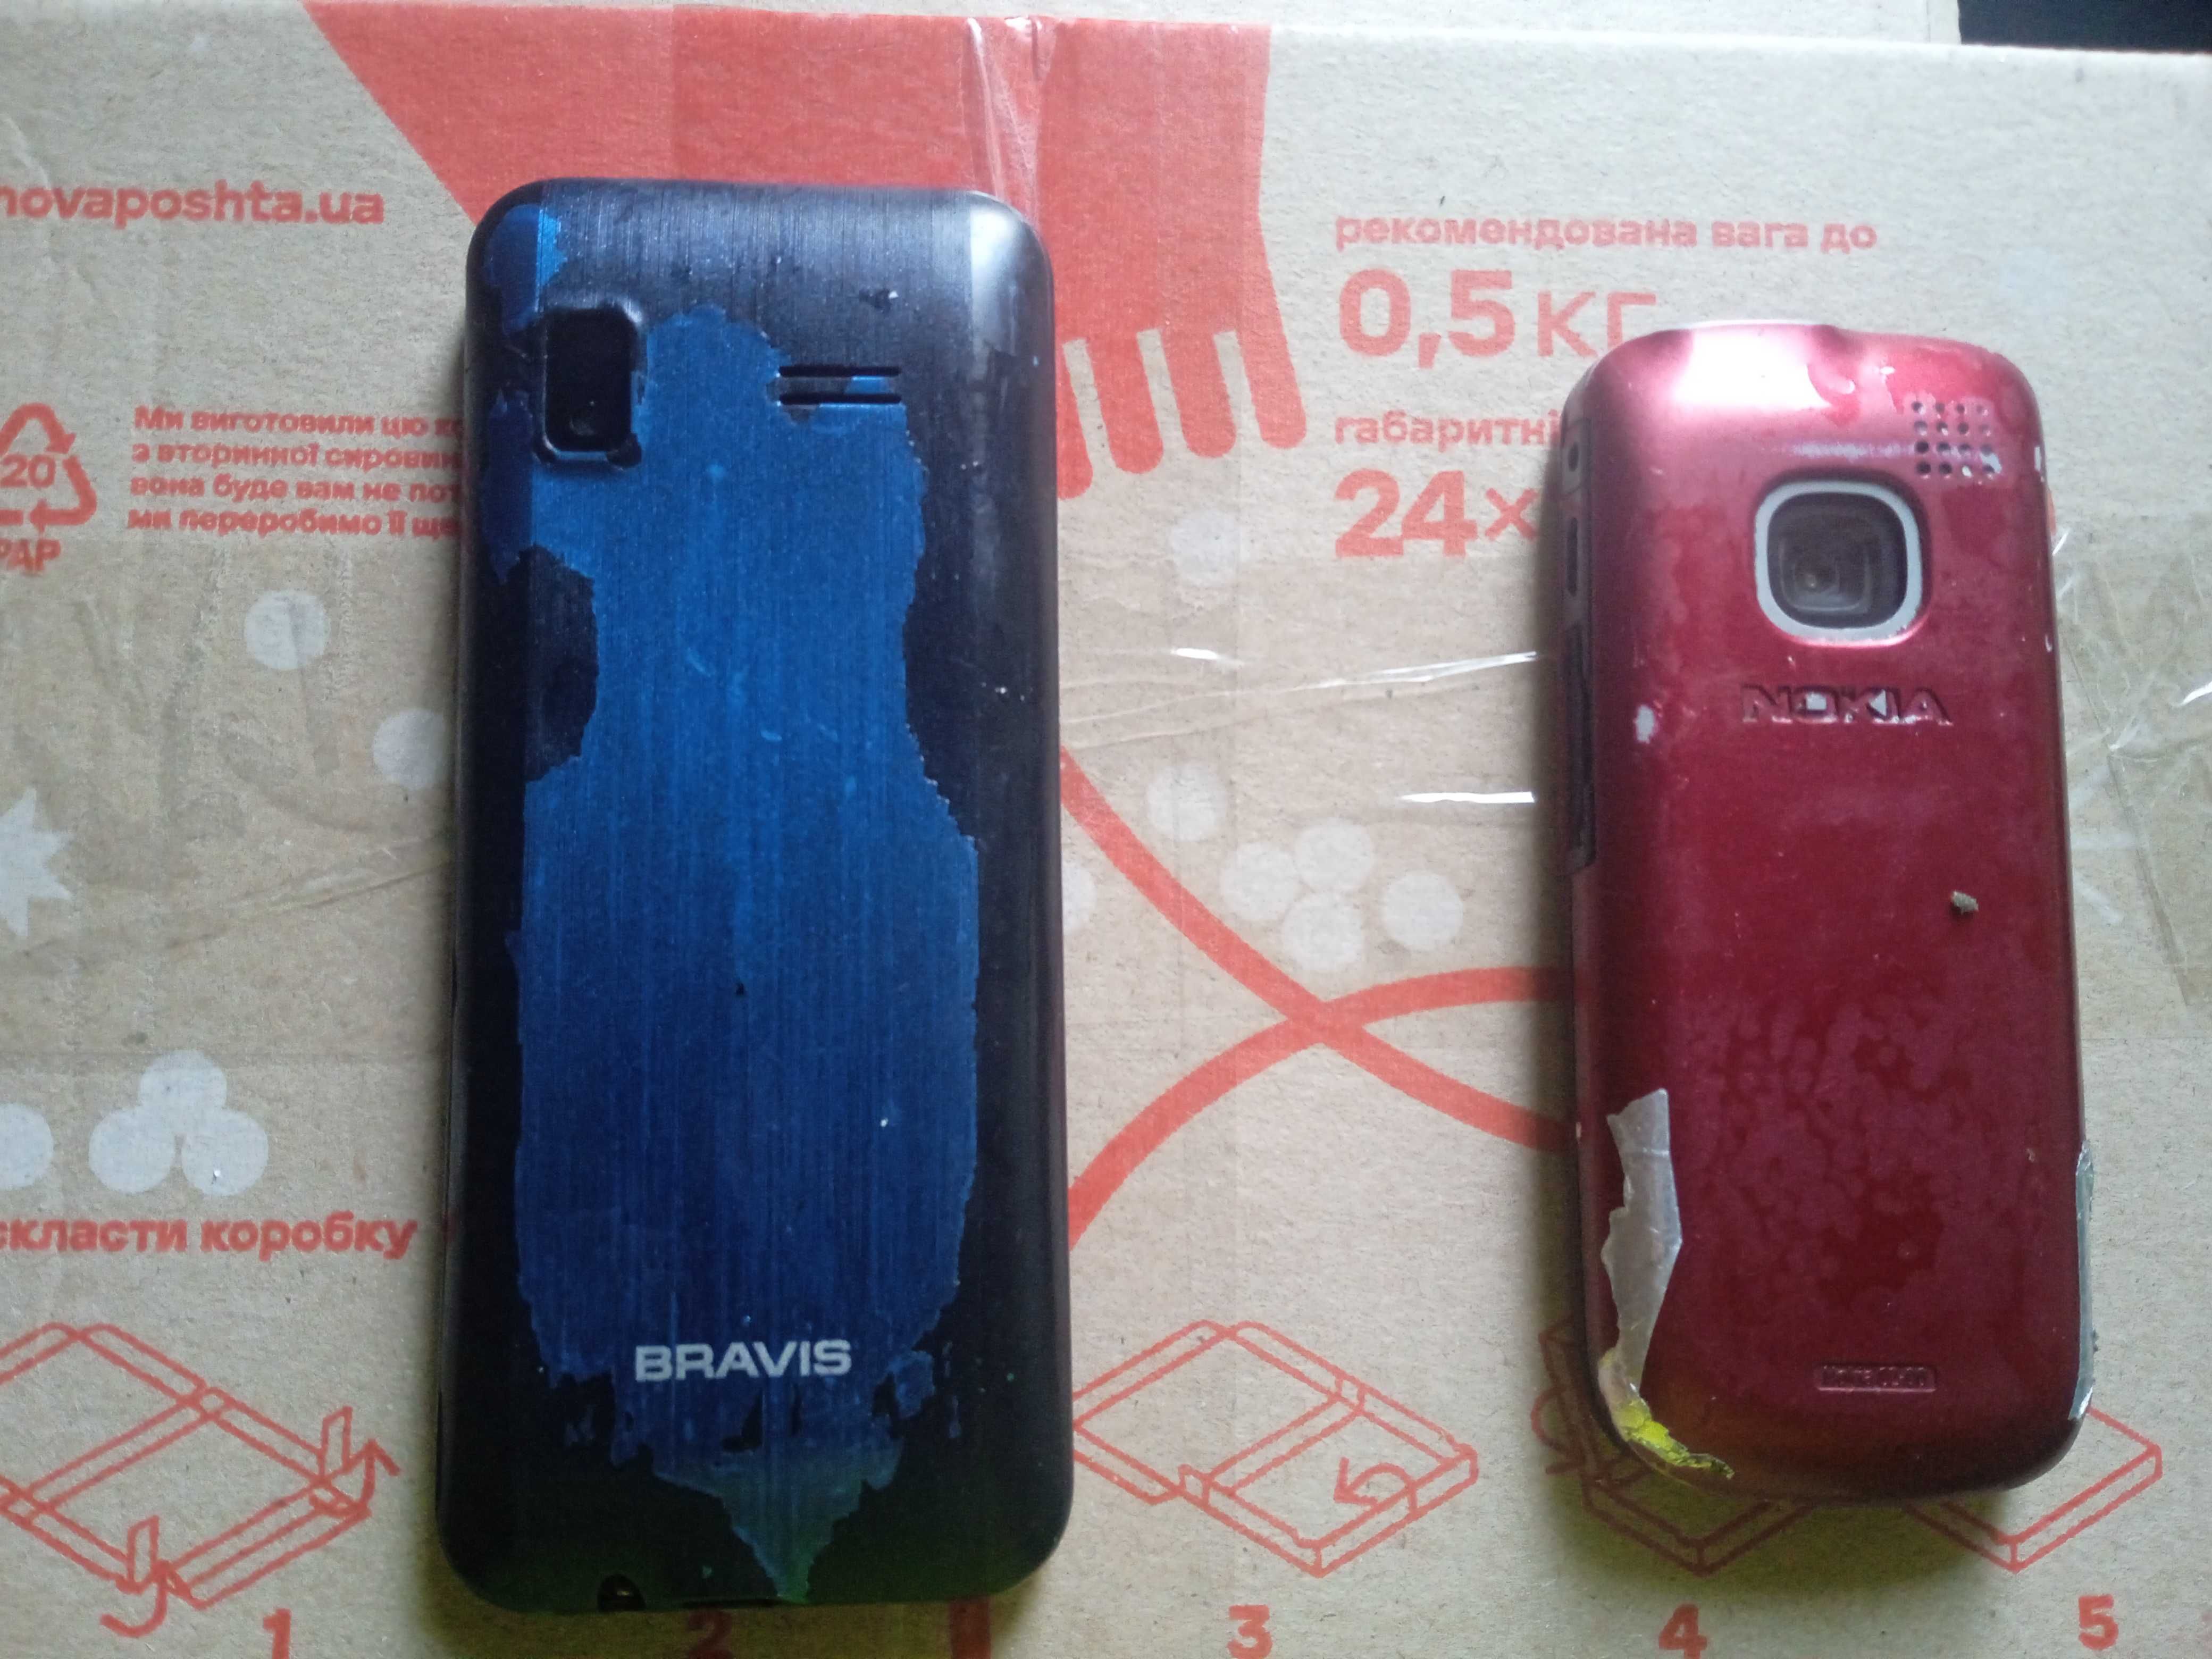 2 нерабочие мобилки, Bravis-20грн. и Nokia-50грн. (с аккумуляторами).